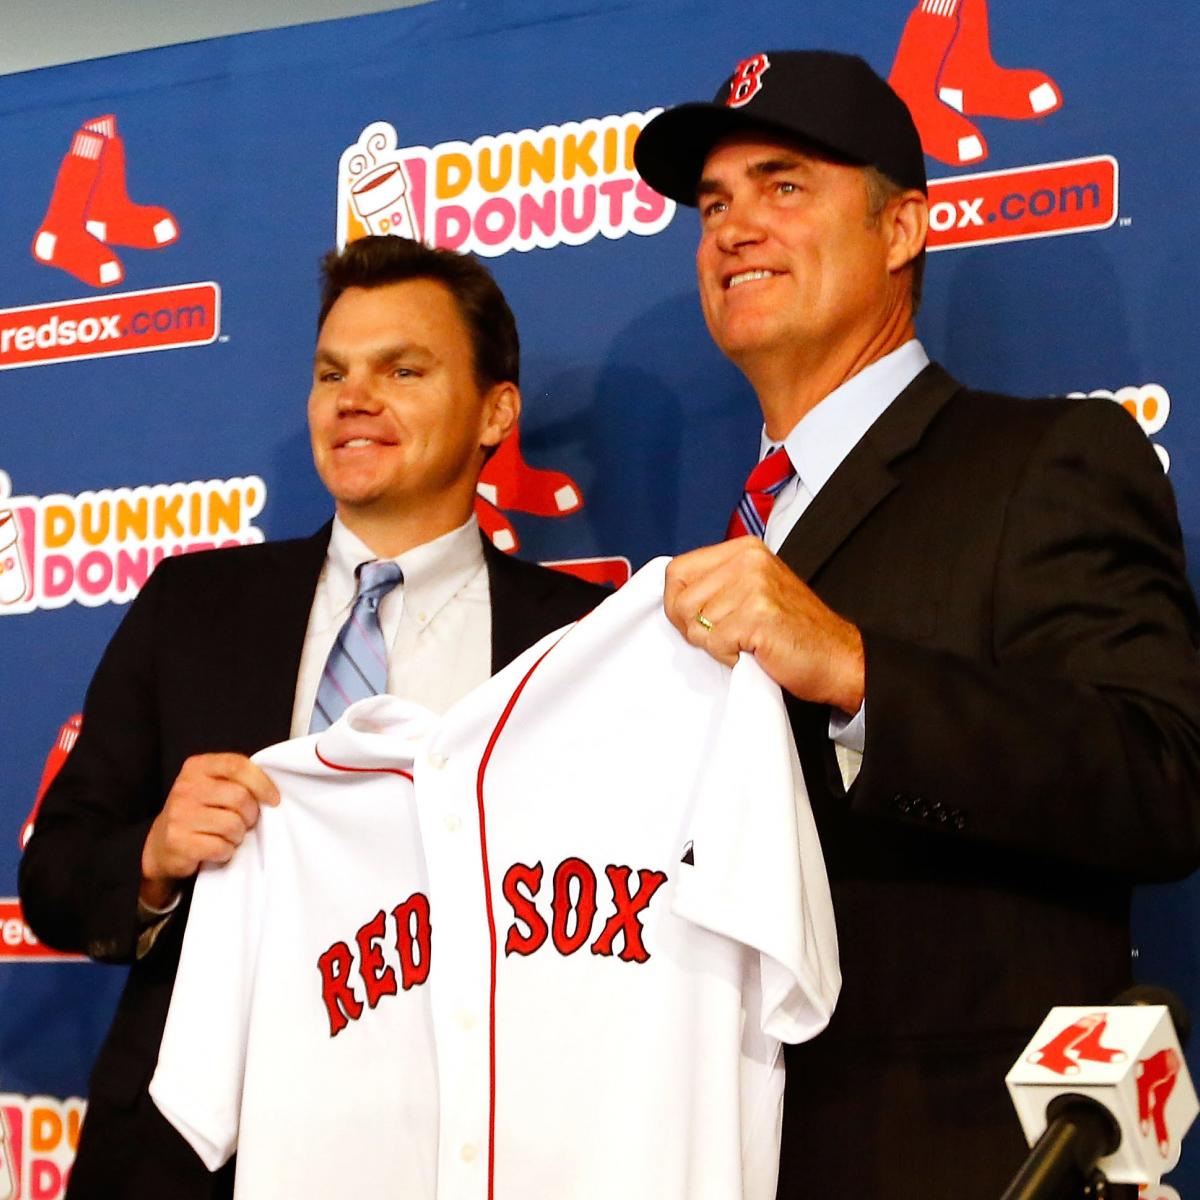 Red Sox to trade Kevin Youkilis? Ben Cherington denies report